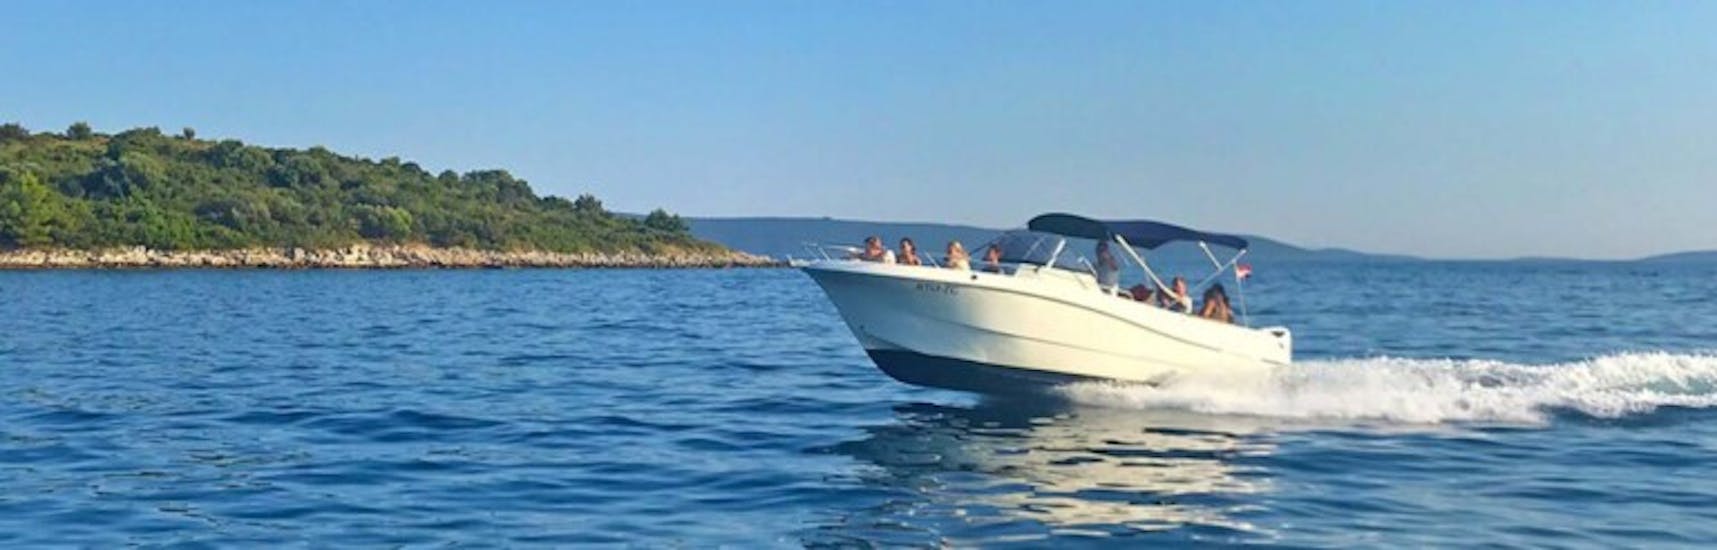 Excursión privada en barco a la Laguna Azul desde Trogir.